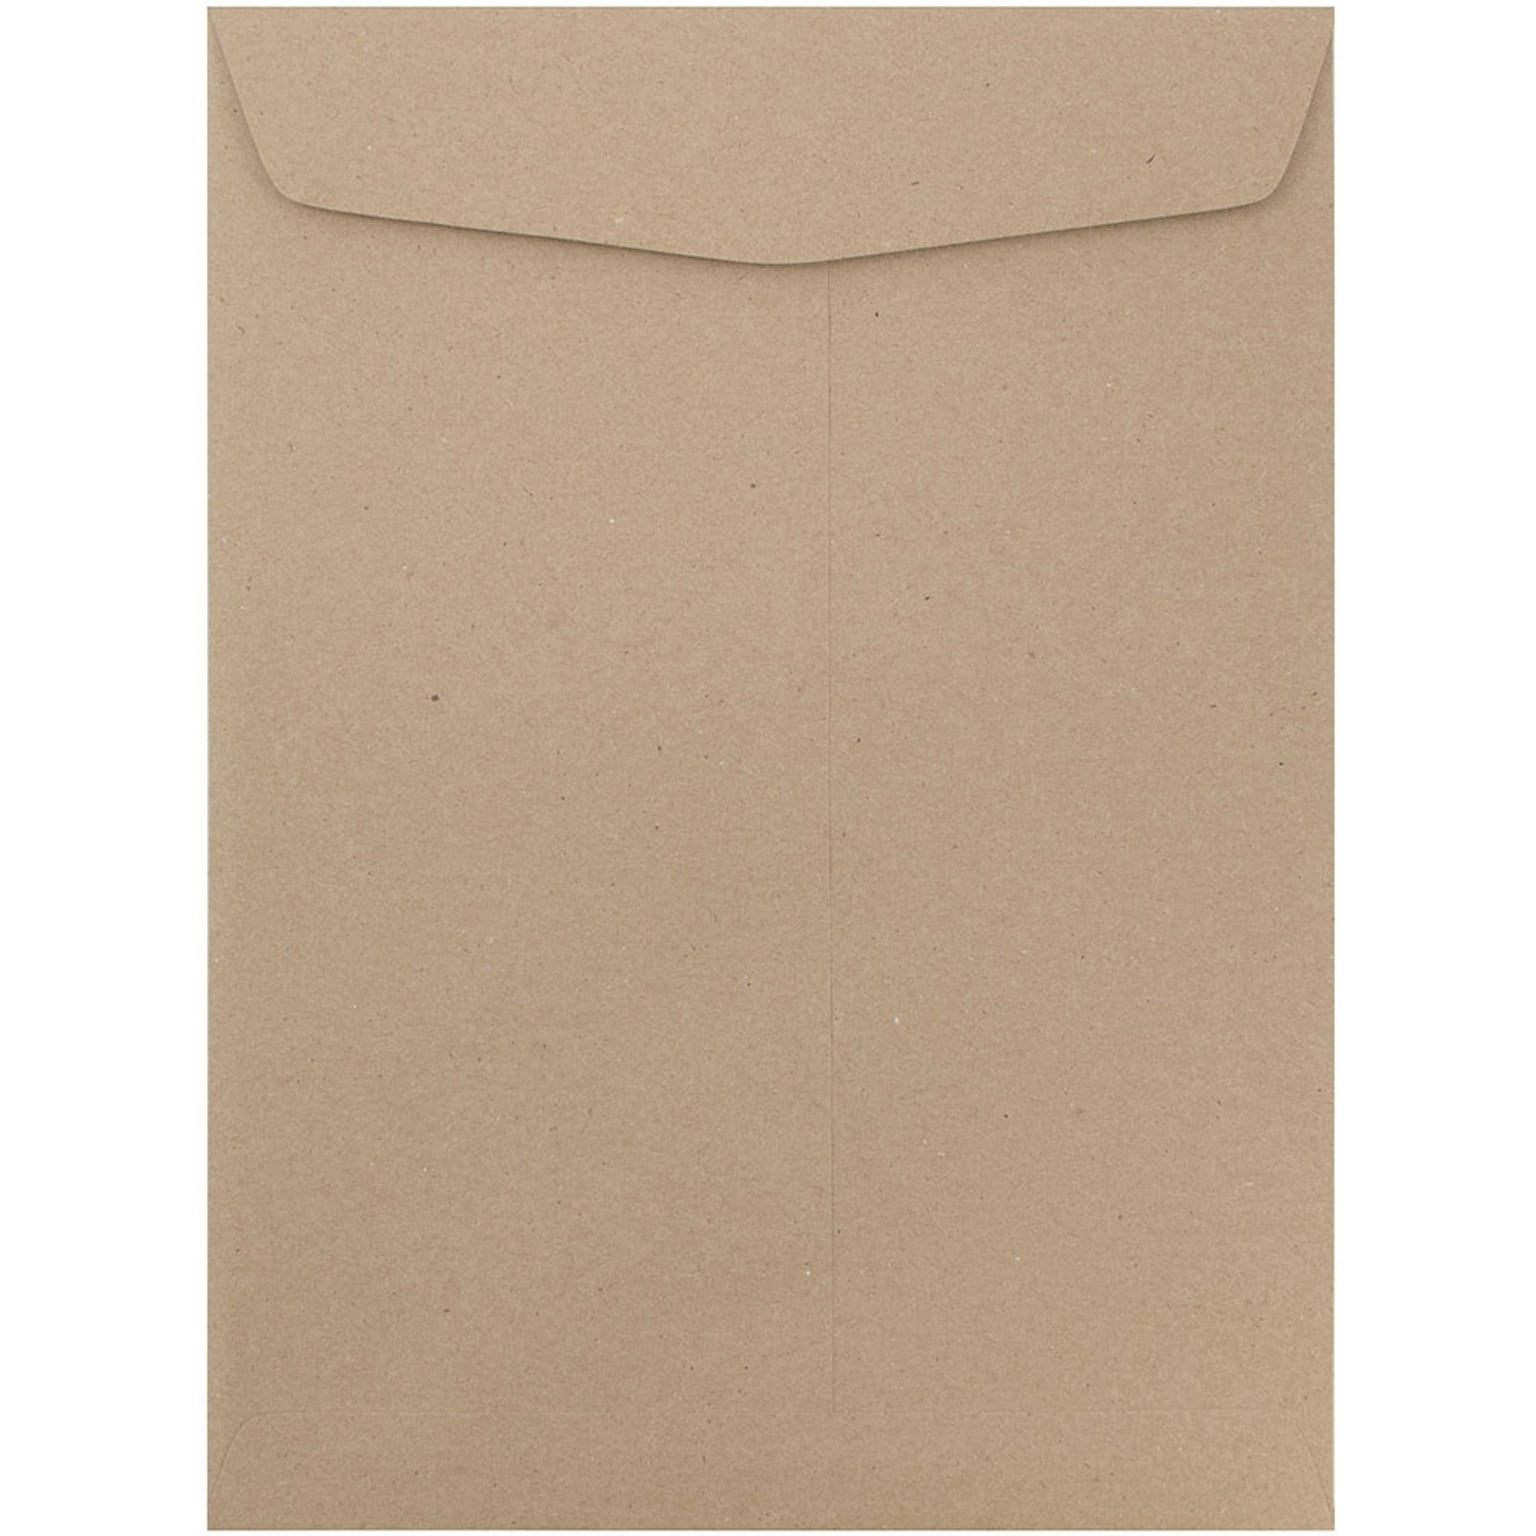 JAM Paper 10 x 13 Open End Catalog Envelopes, Brown Kraft Paper Bag, 100/Pack (6315603)